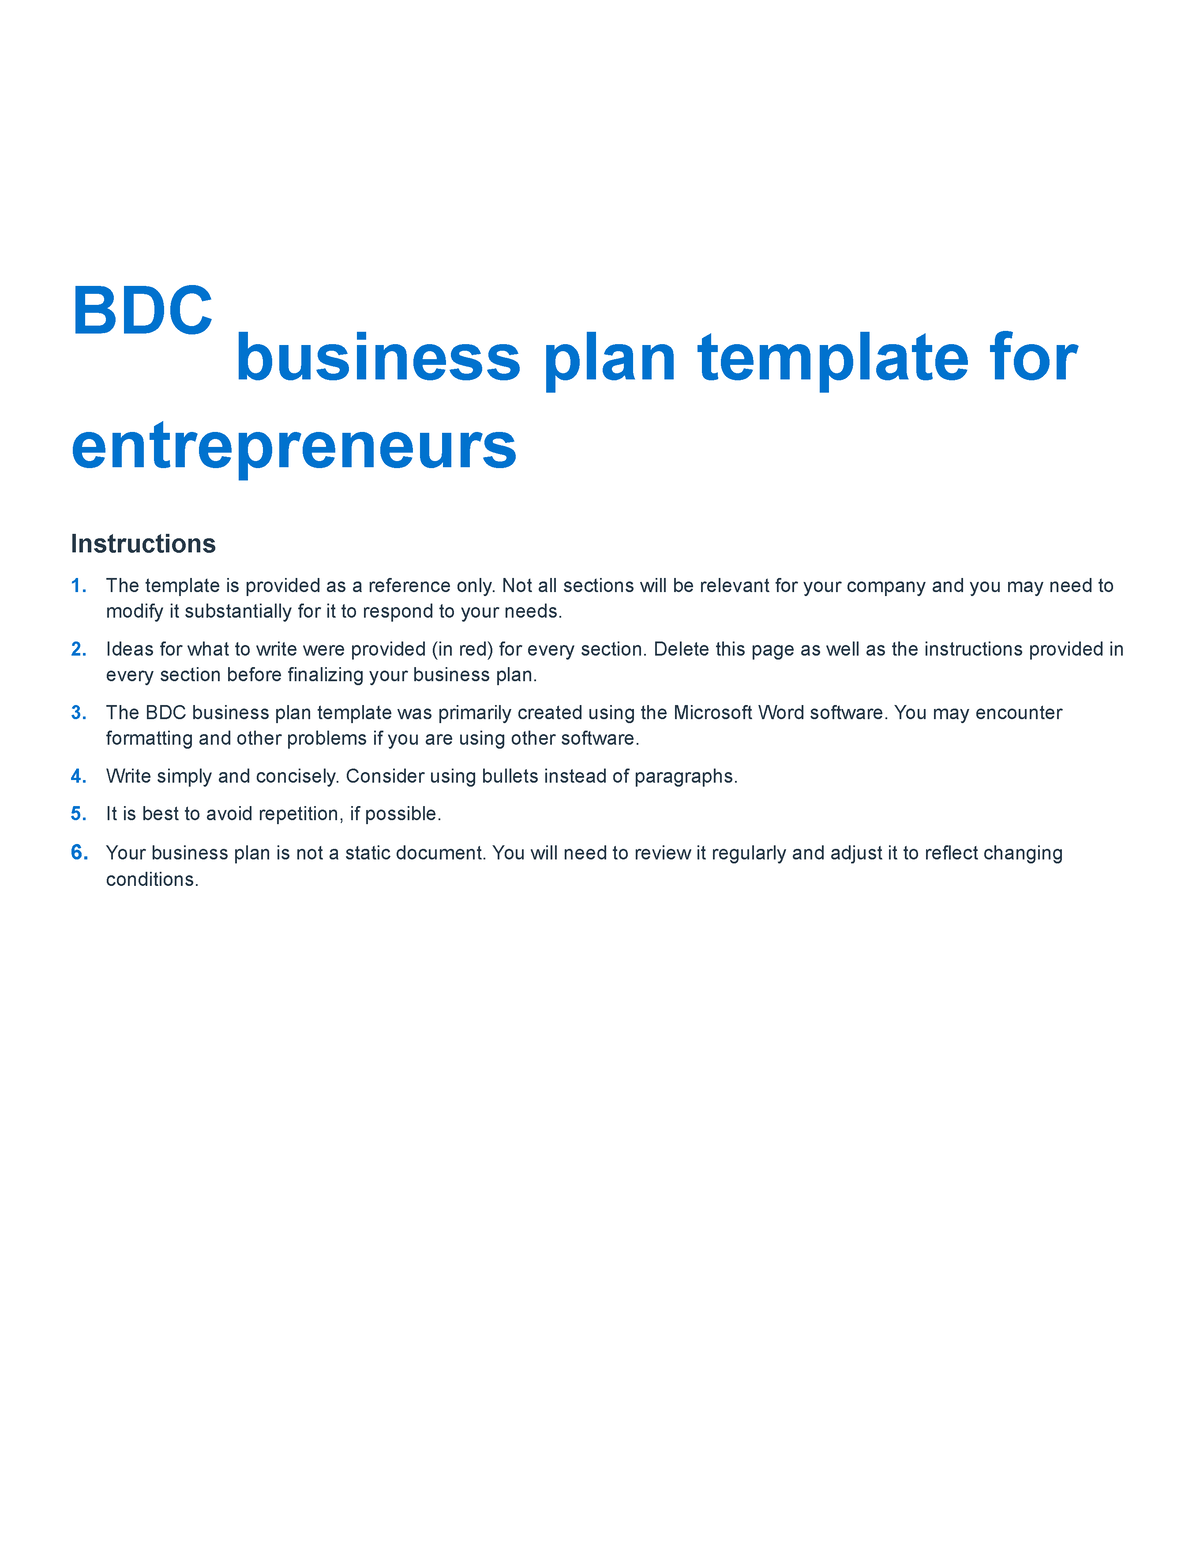 bdc business plan template